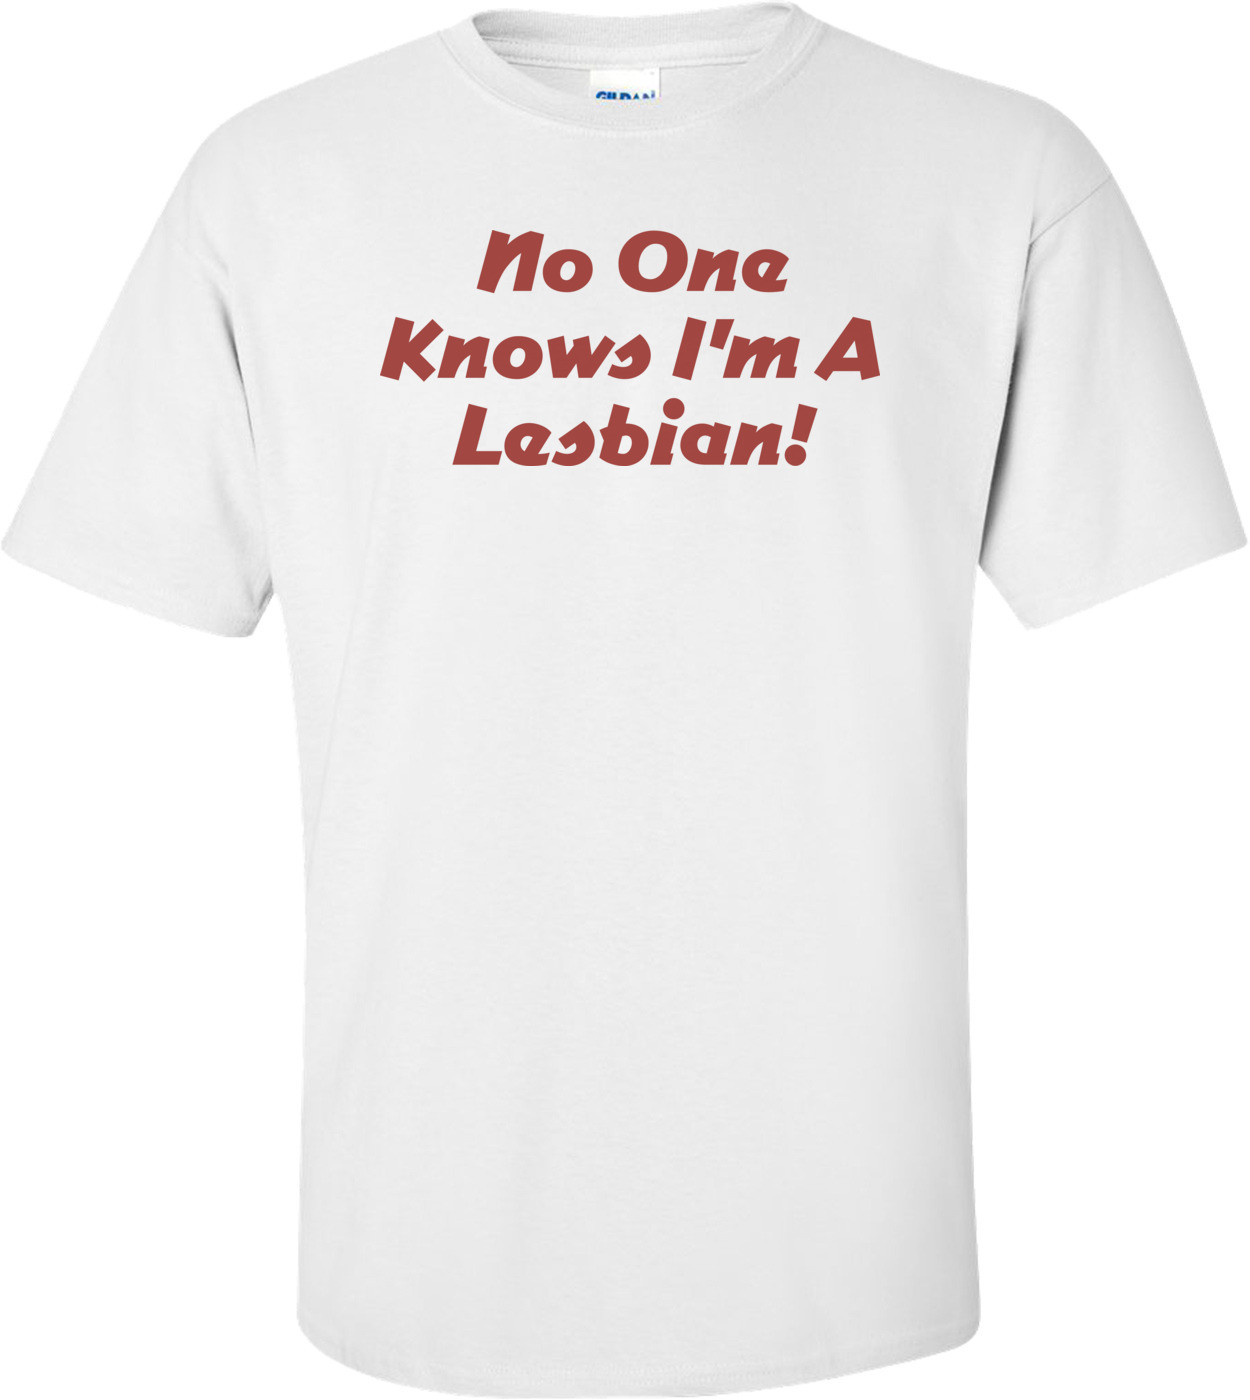 No One Knows I'm A Lesbian T-shirt 